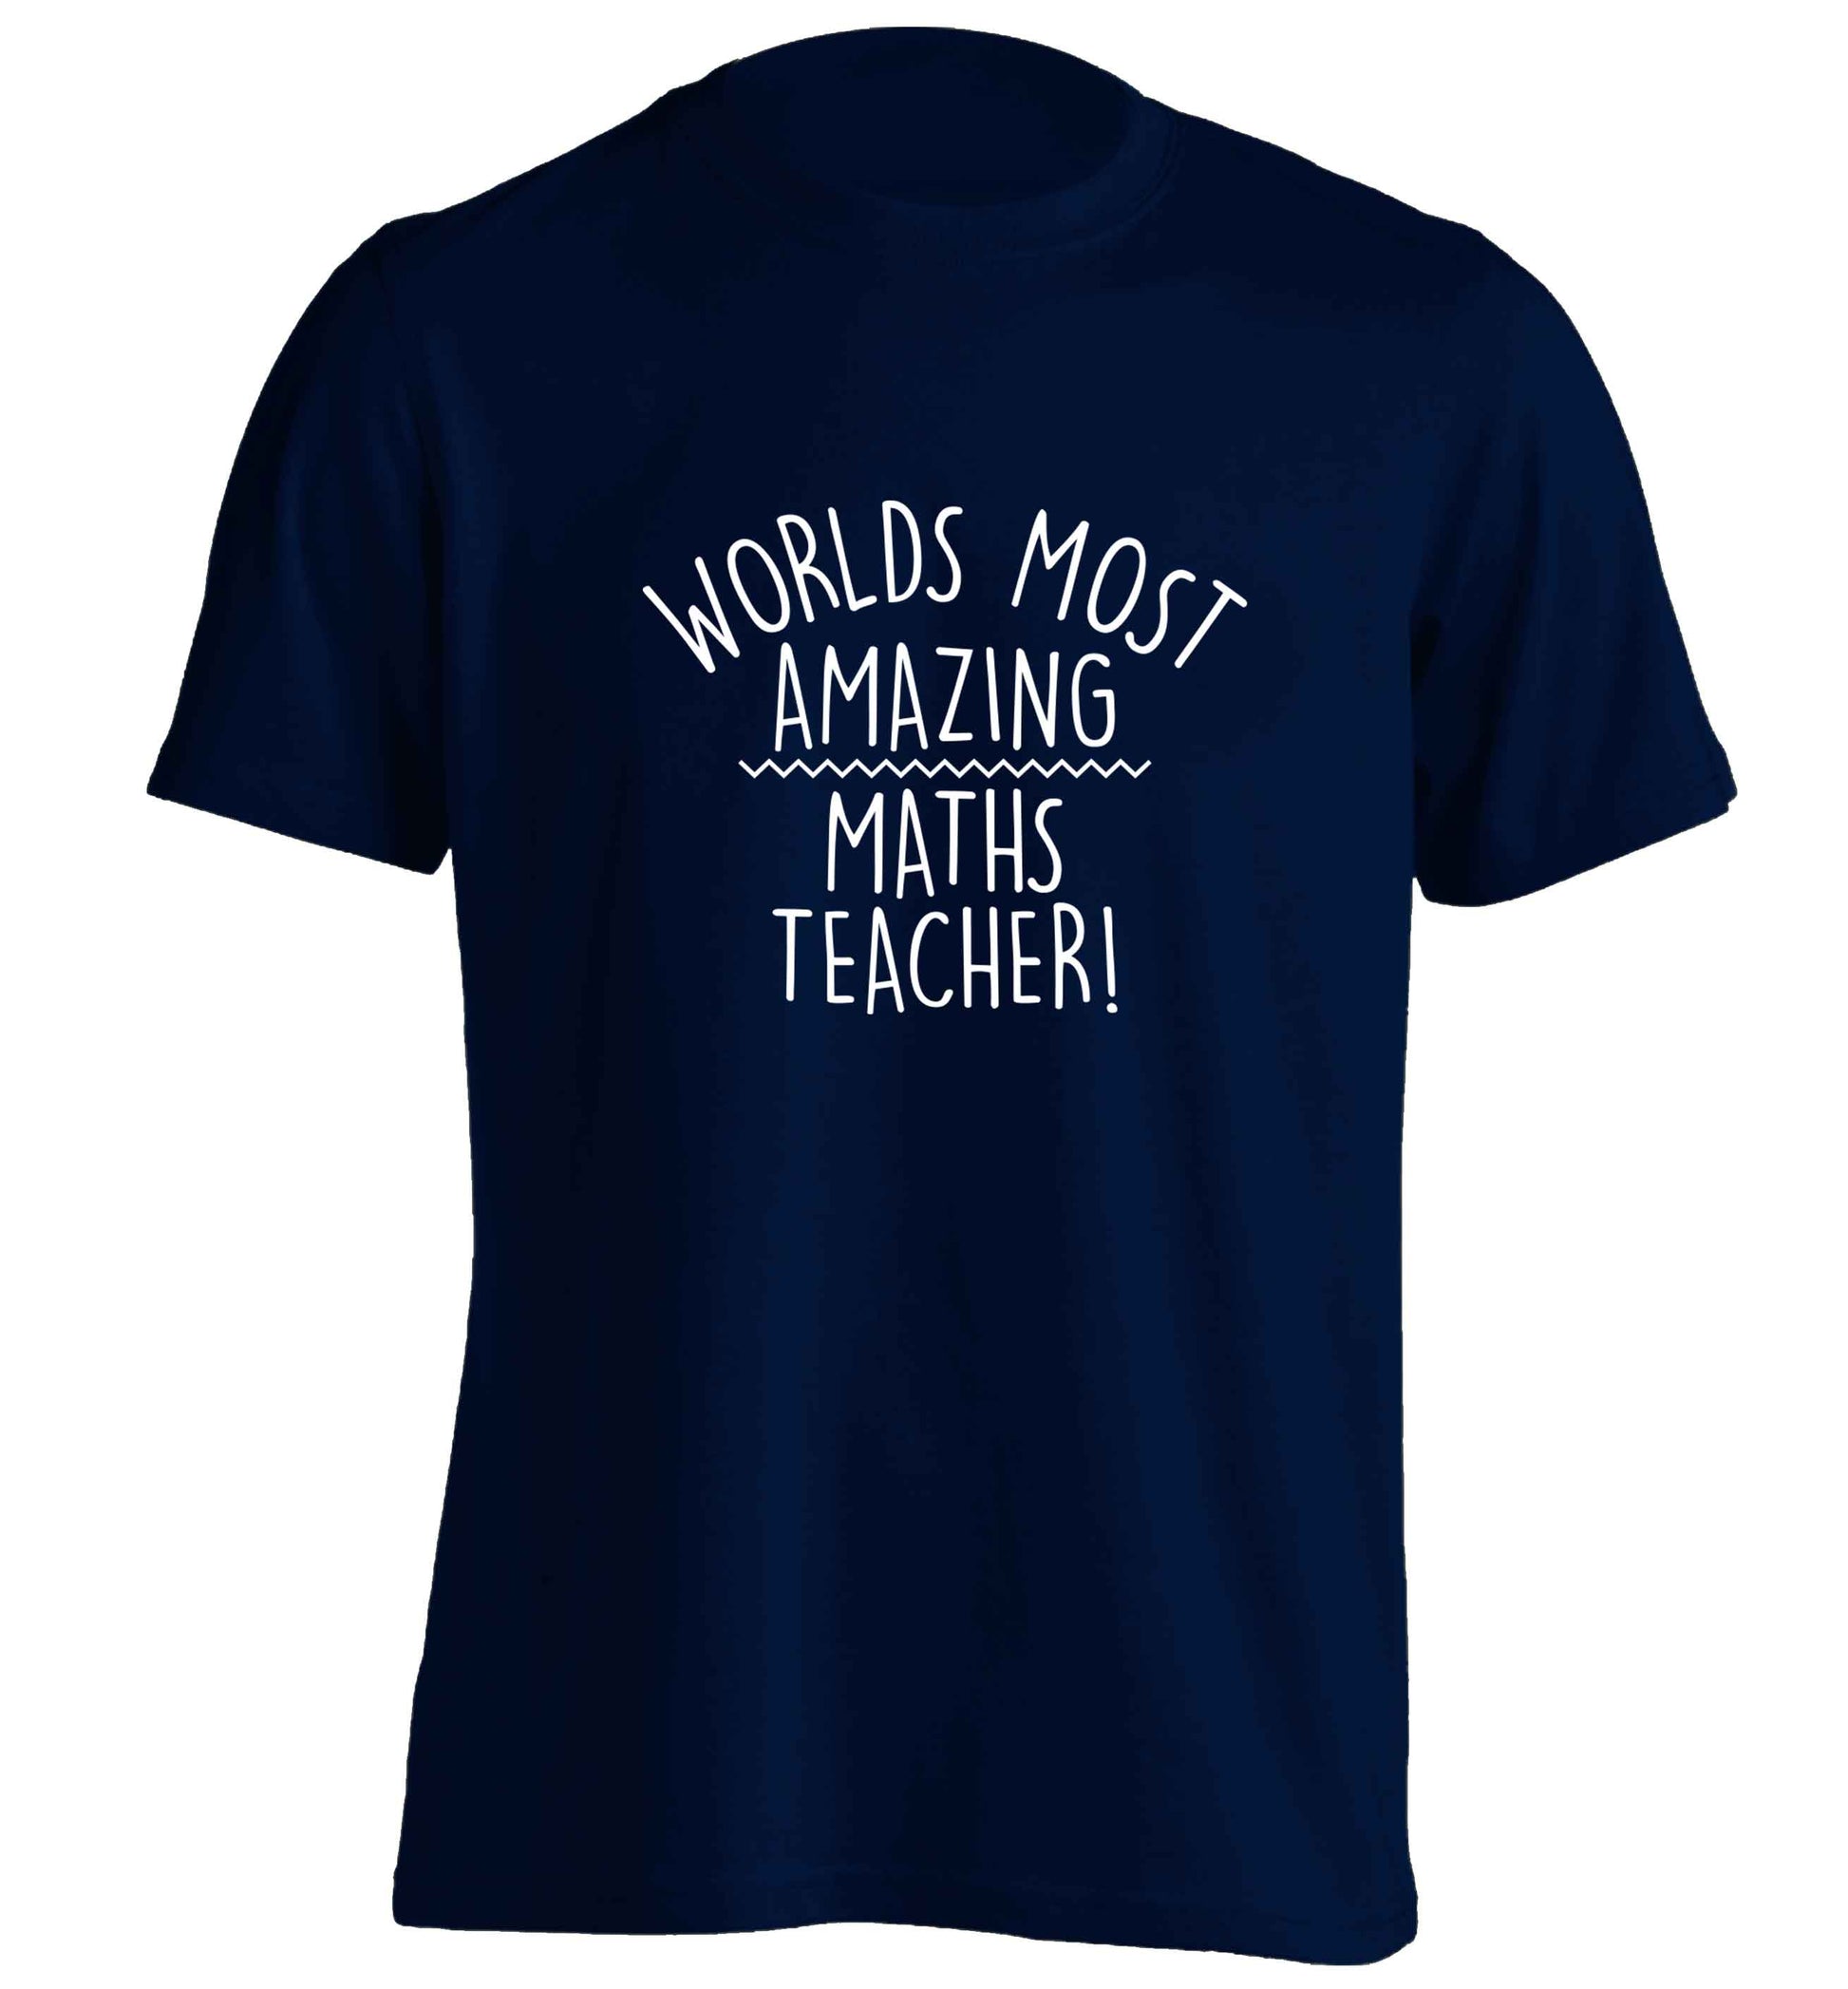 Worlds most amazing maths teacher adults unisex navy Tshirt 2XL